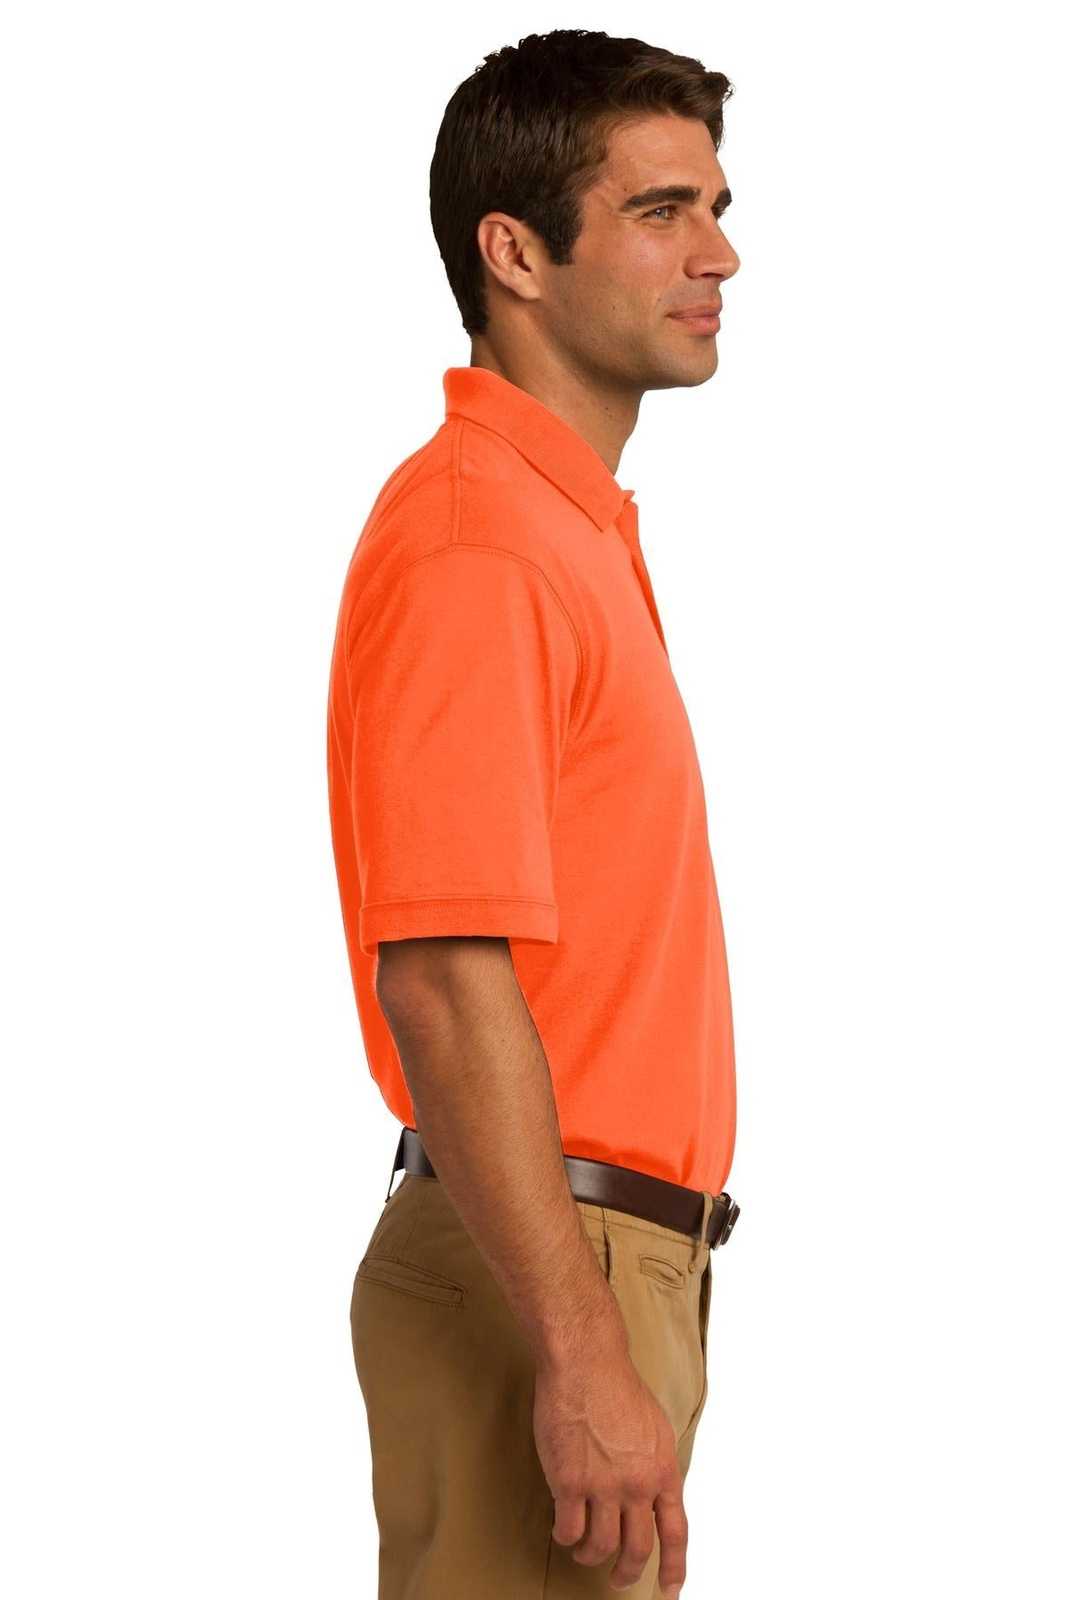 Port &amp; Company KP55P Core Blend Jersey Knit Pocket Polo - Safety Orange - HIT a Double - 3